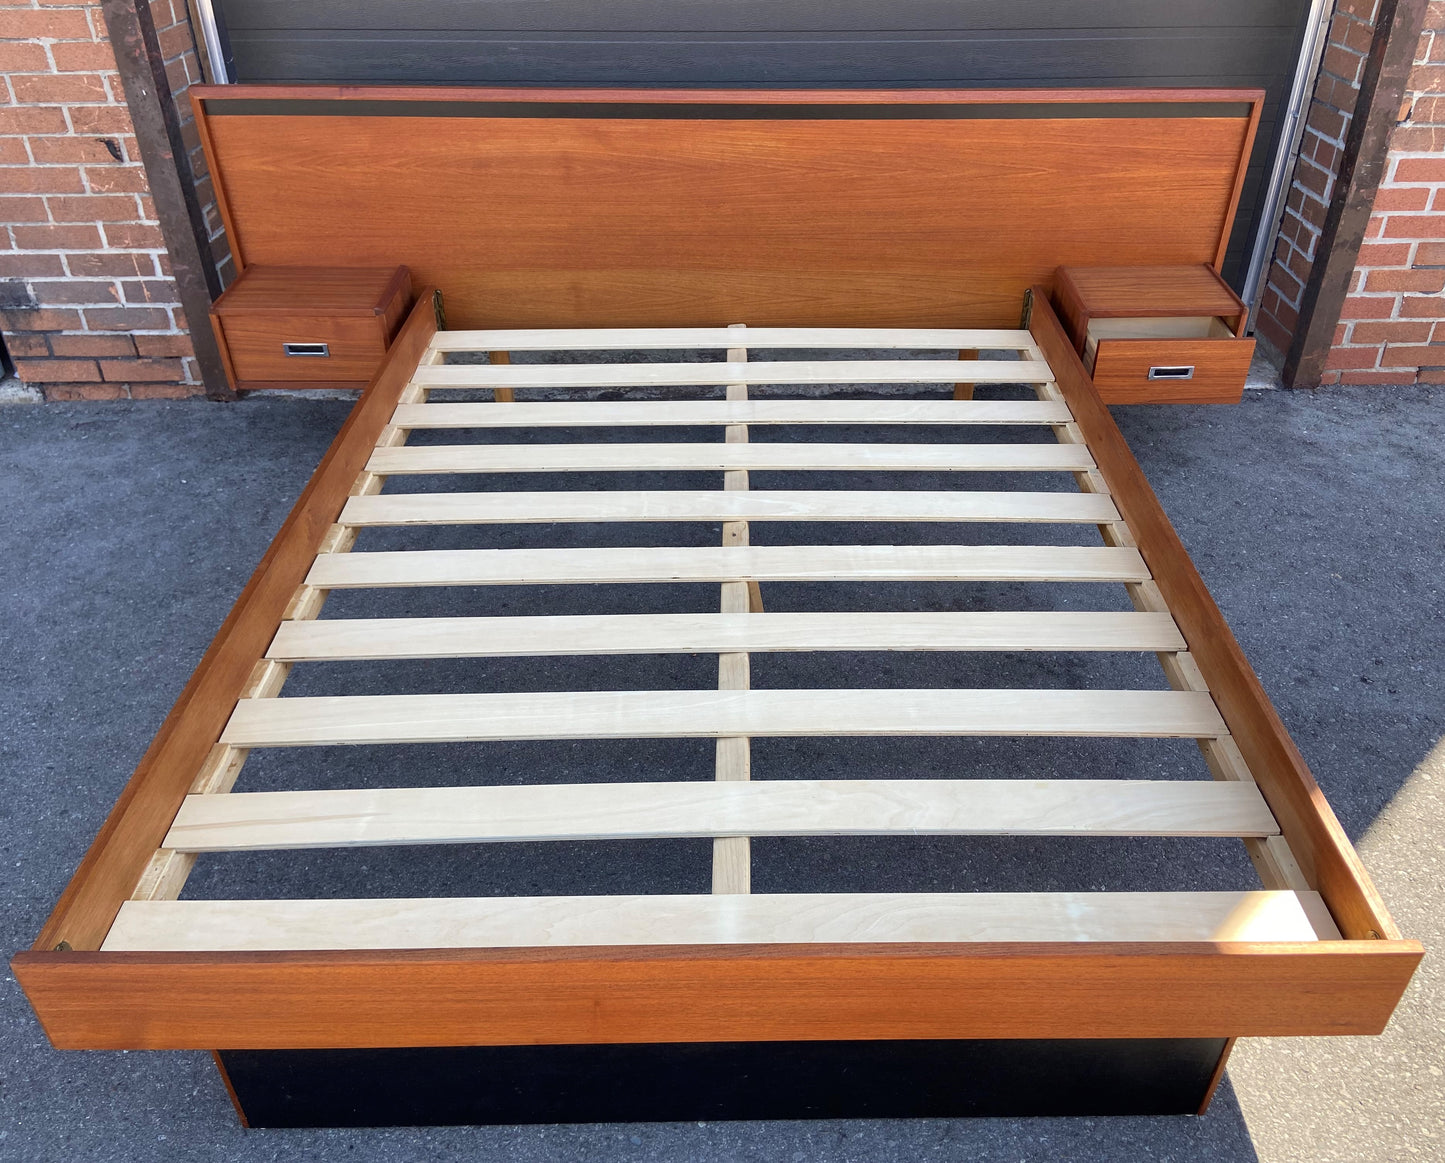 REFINISHED Queen Mid Century Modern Teak Bed w floating nightstands